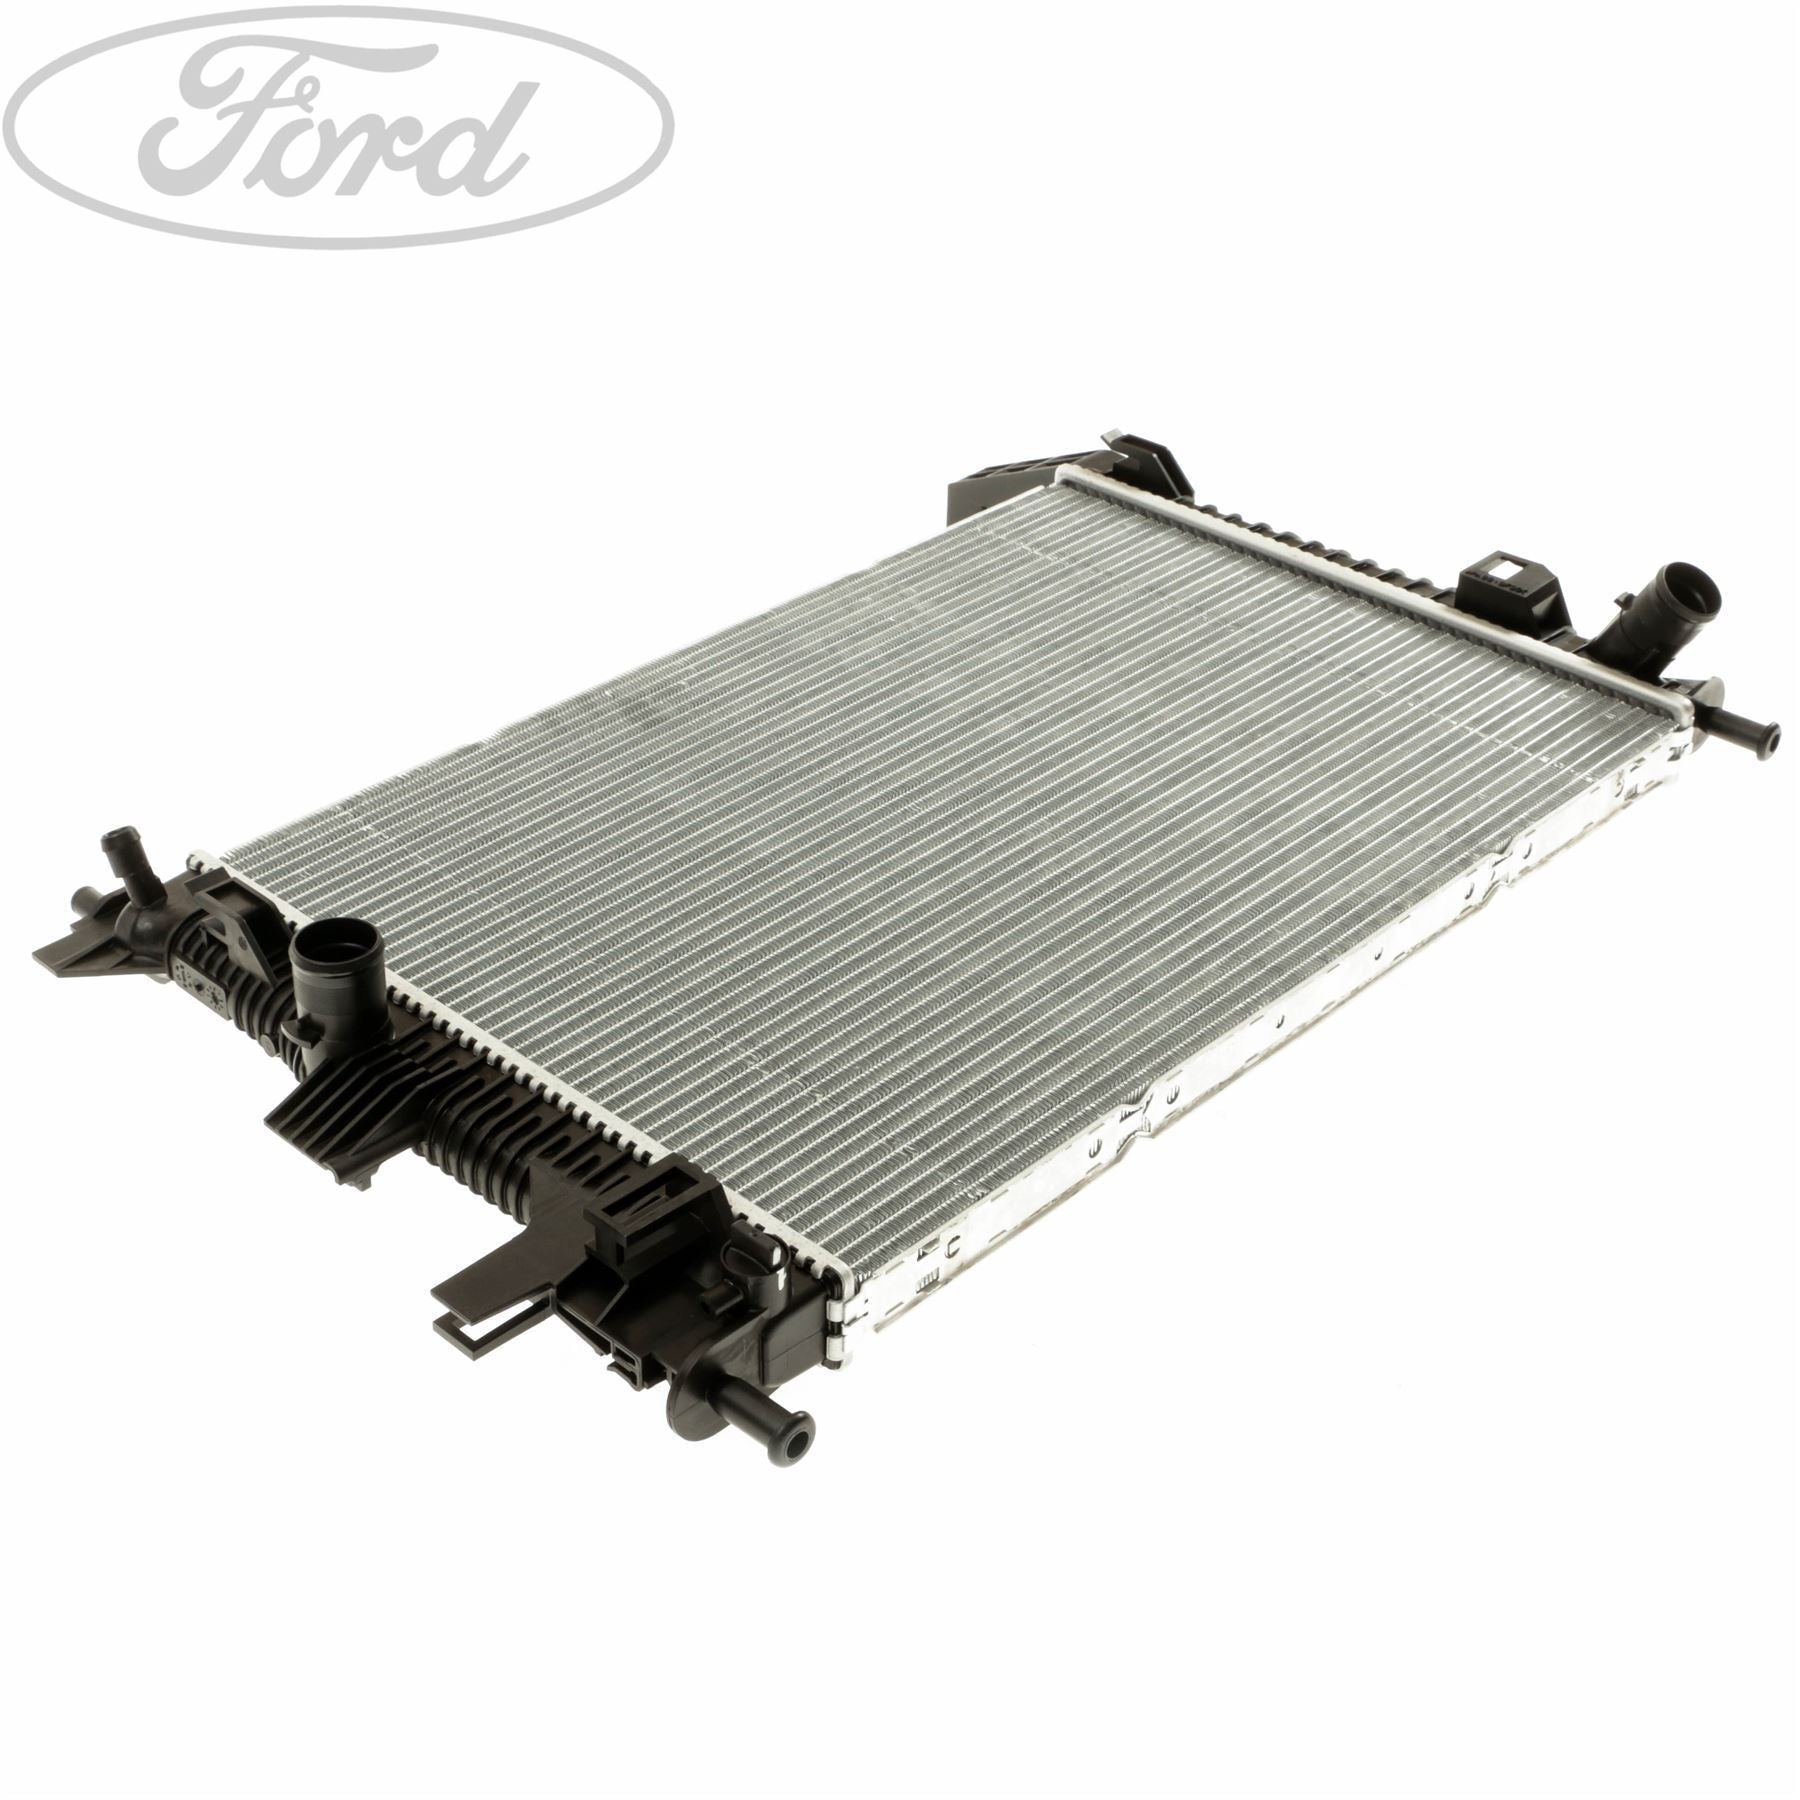 NEU + Kühler Ford Focus 1.6 - 16V / 1.8 - 16V / 2.0 - 16V Automatic /  Klimaanlage - 9.98 - 8.05 - Kühlsystem W